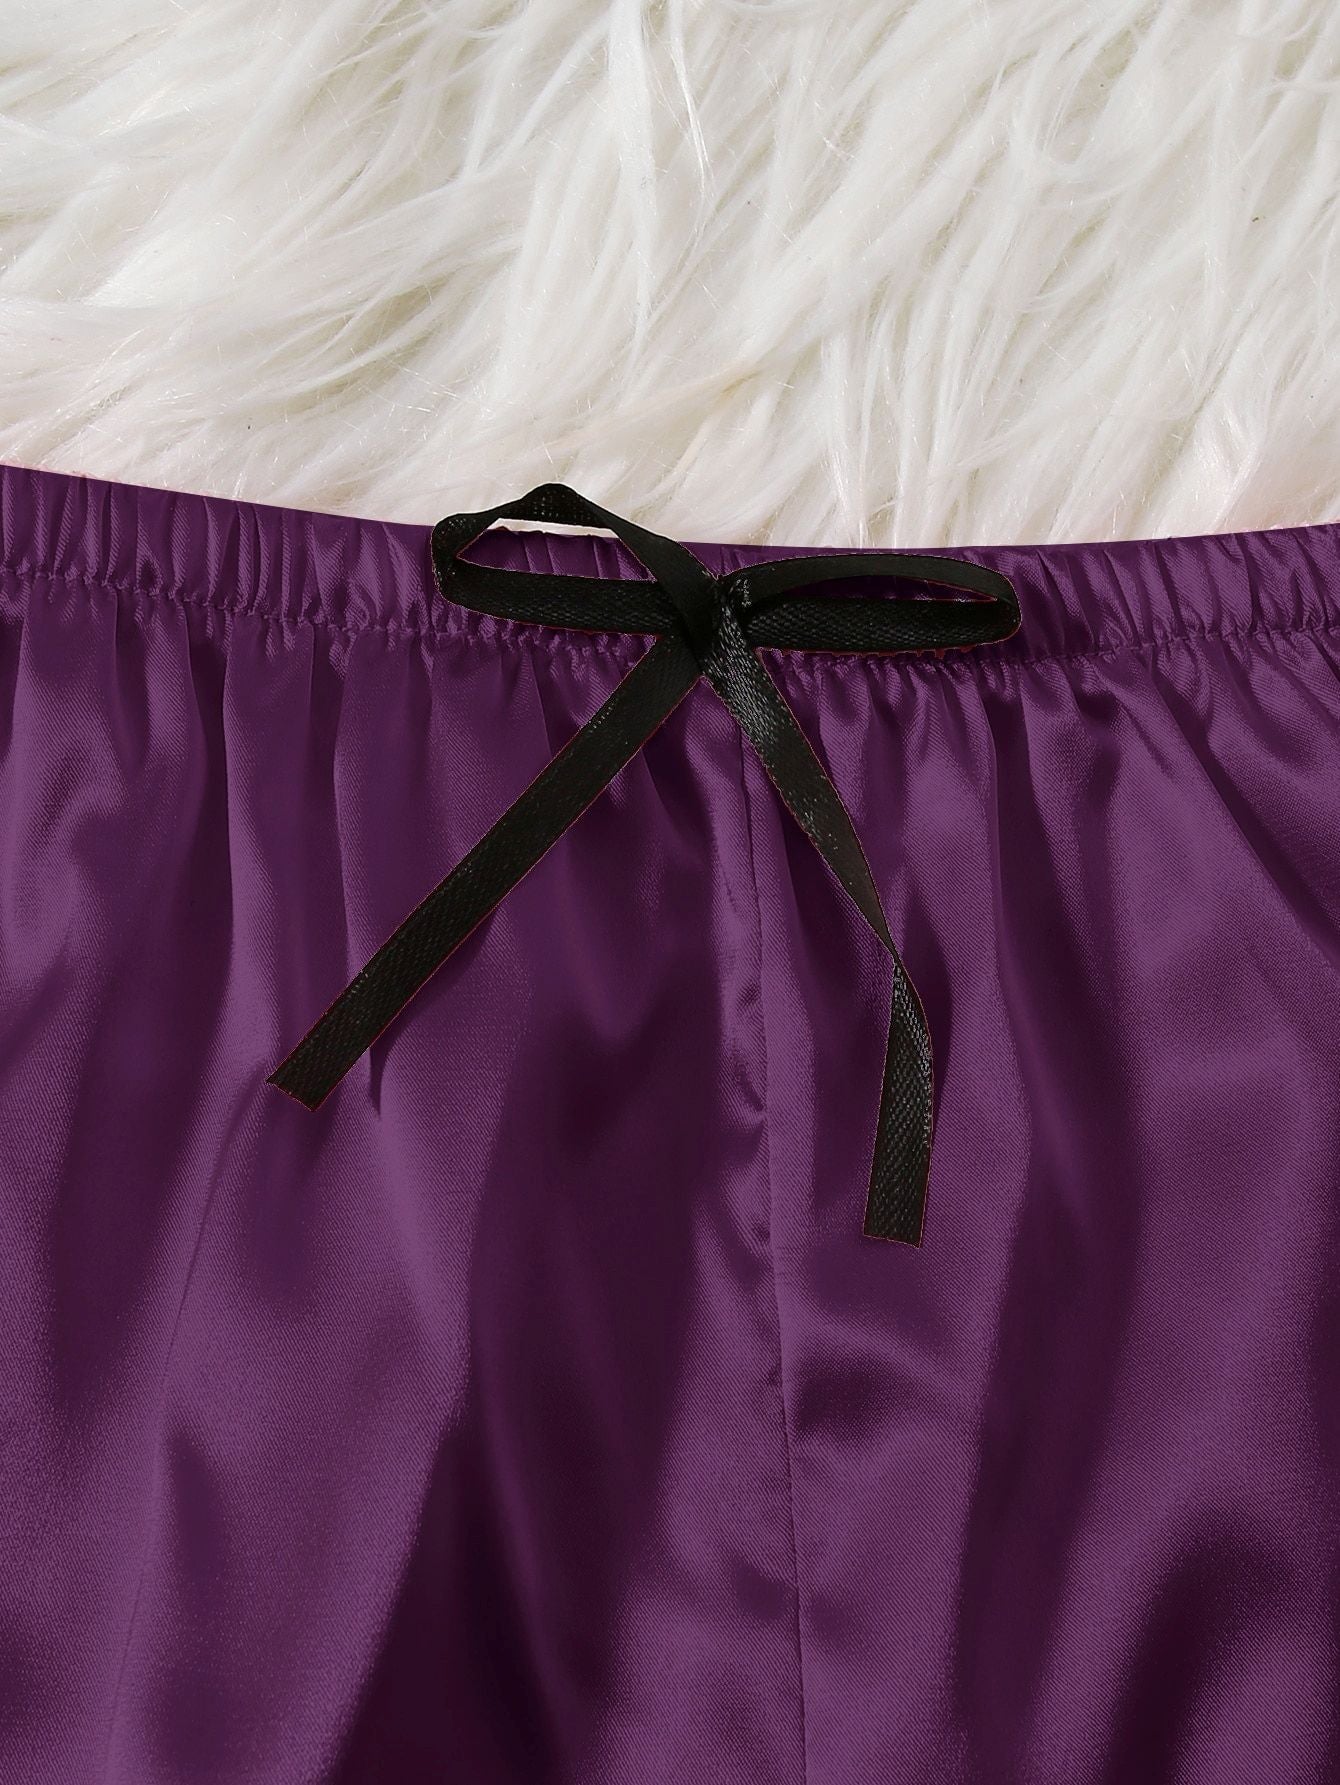 Women Dark Purple Satin Pajamas Lace Exotic Lingerie 4-Piece Set